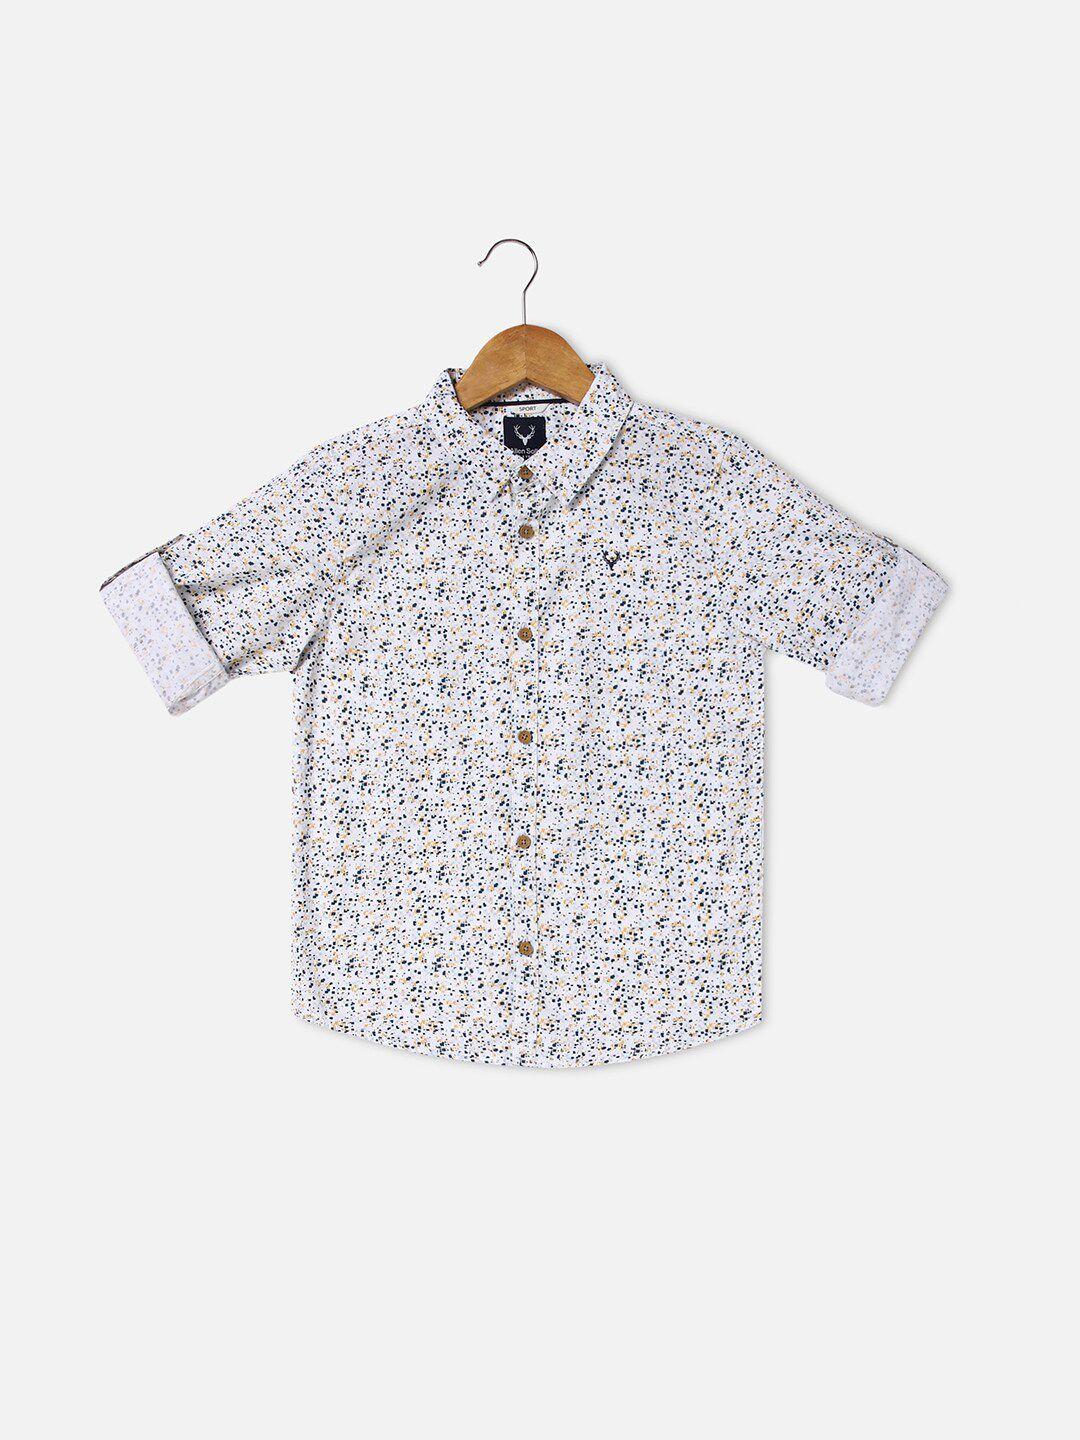 allen solly junior boys slim fit geometric printed pure cotton casual shirt